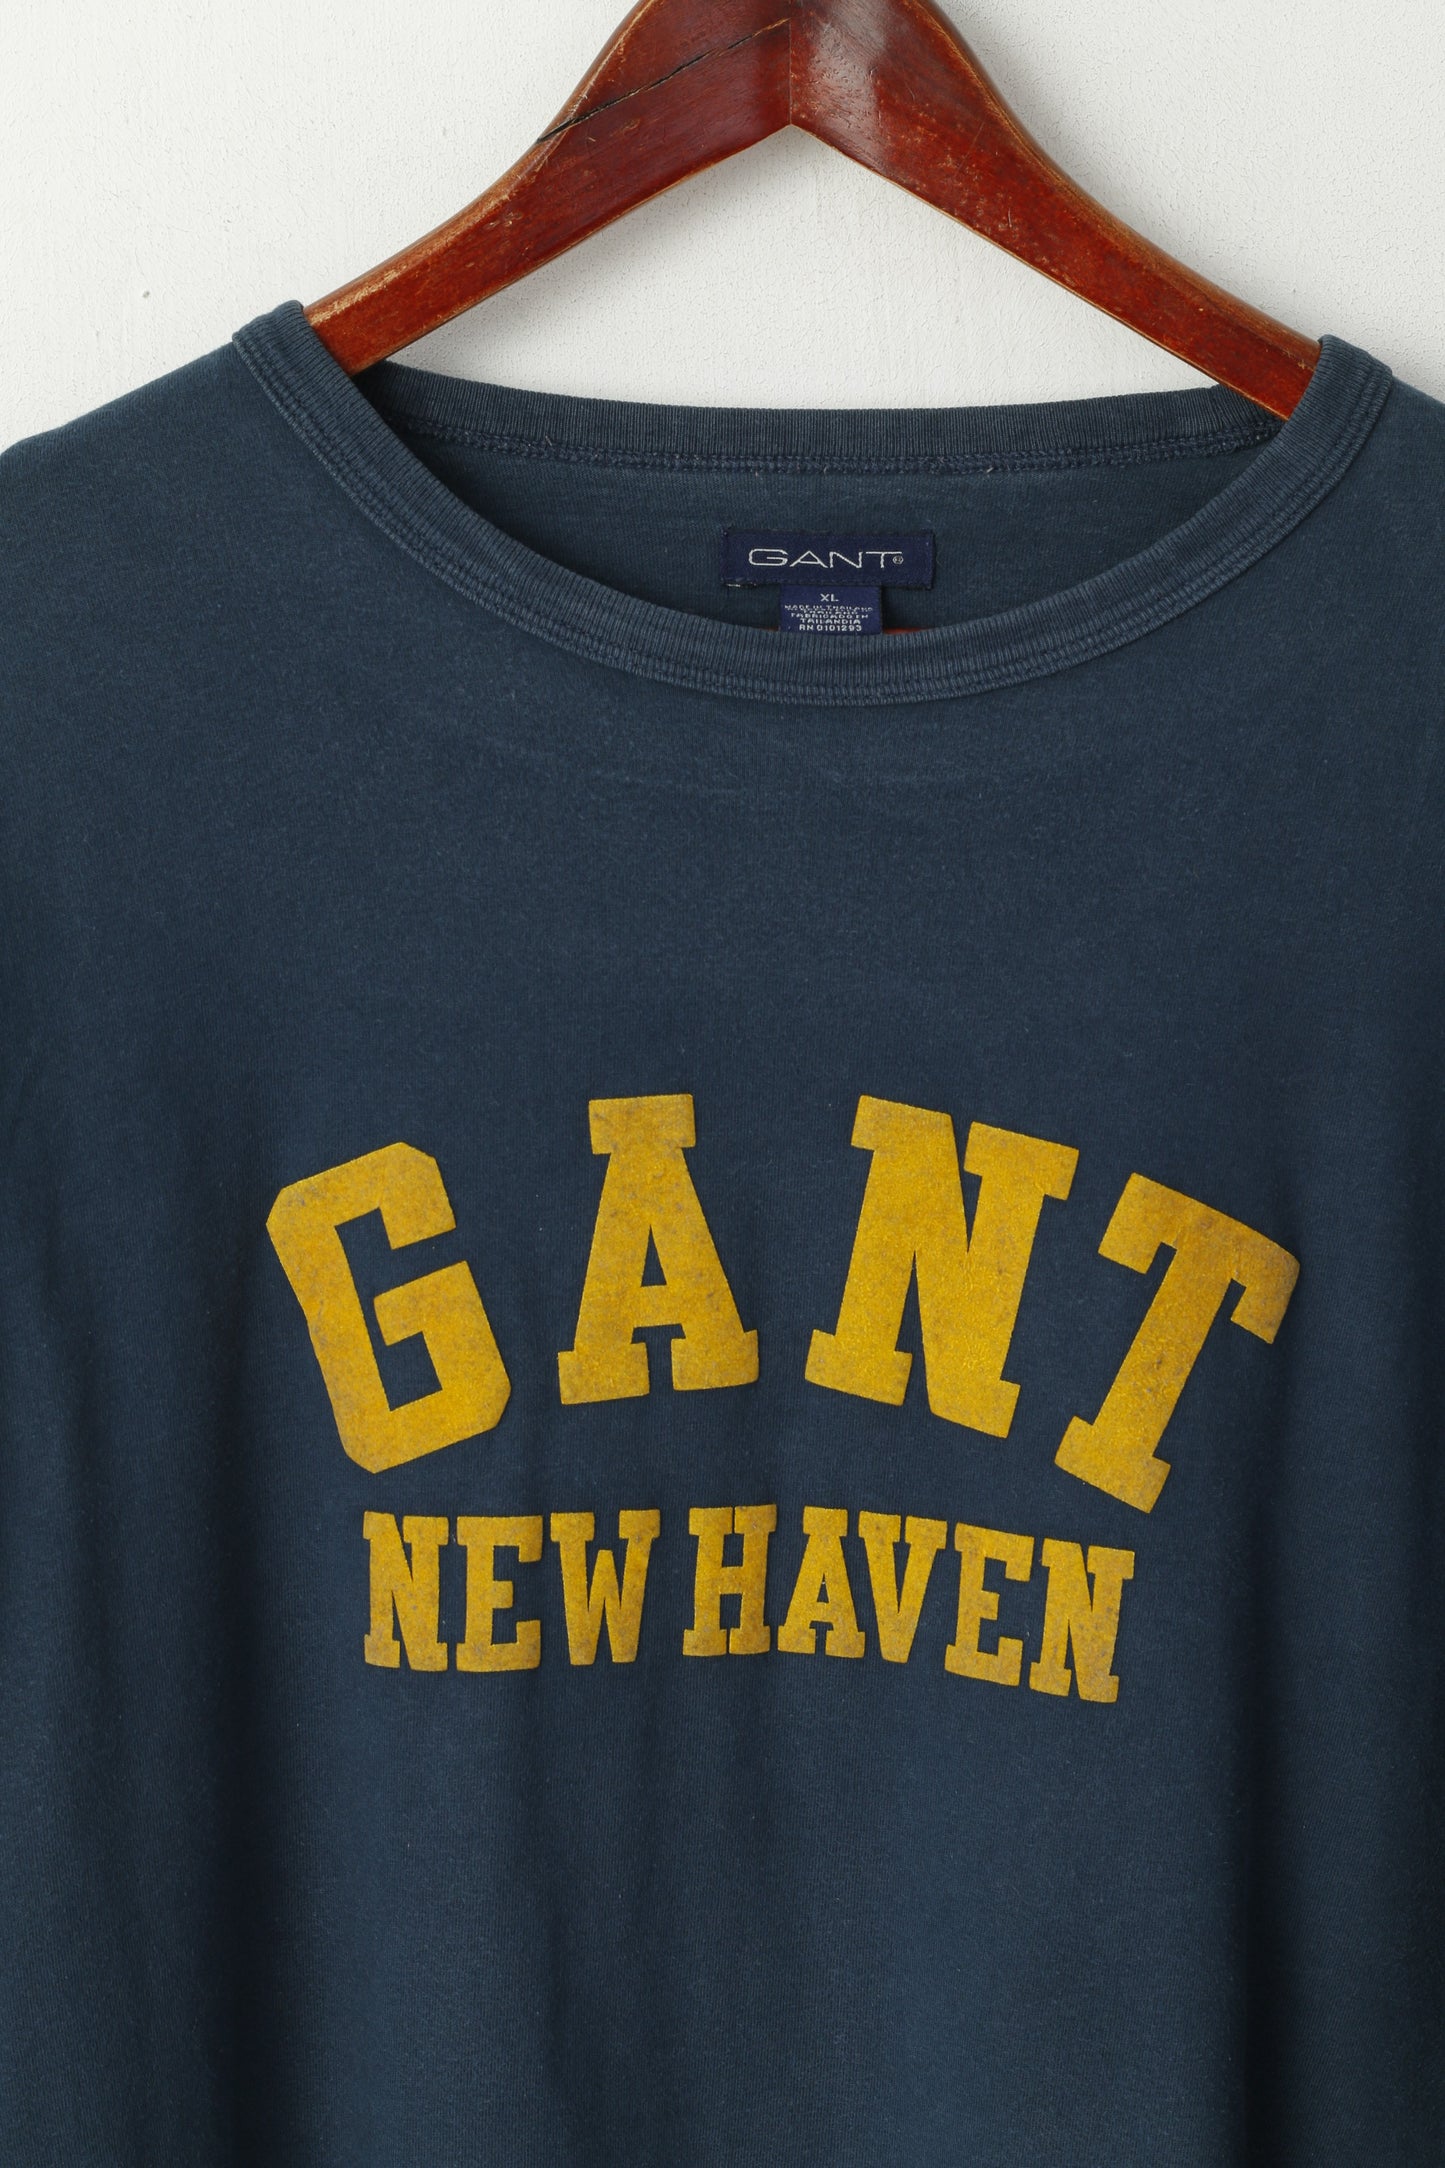 GANT Men XL Long Sleeved Shirt Navy Cotton New Haven Emroidered Crew Neck Top